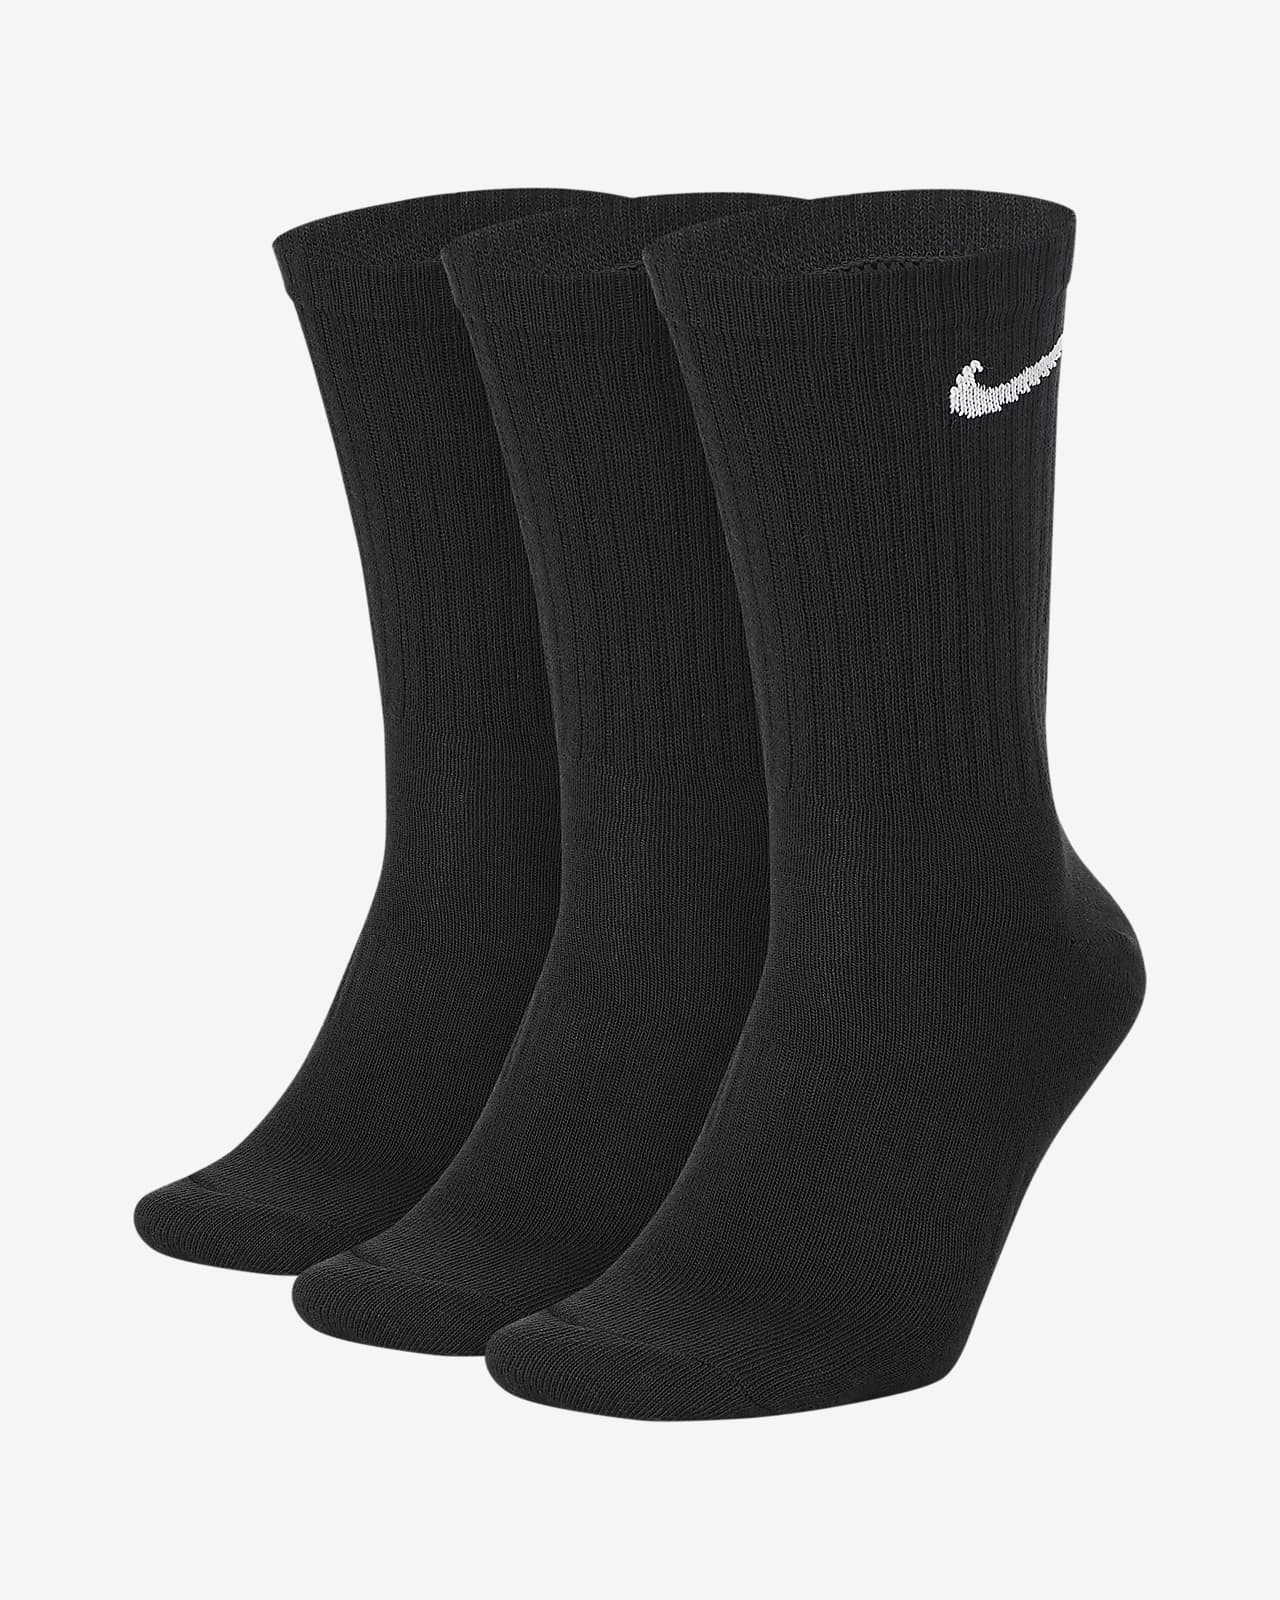 nike socks lightweight